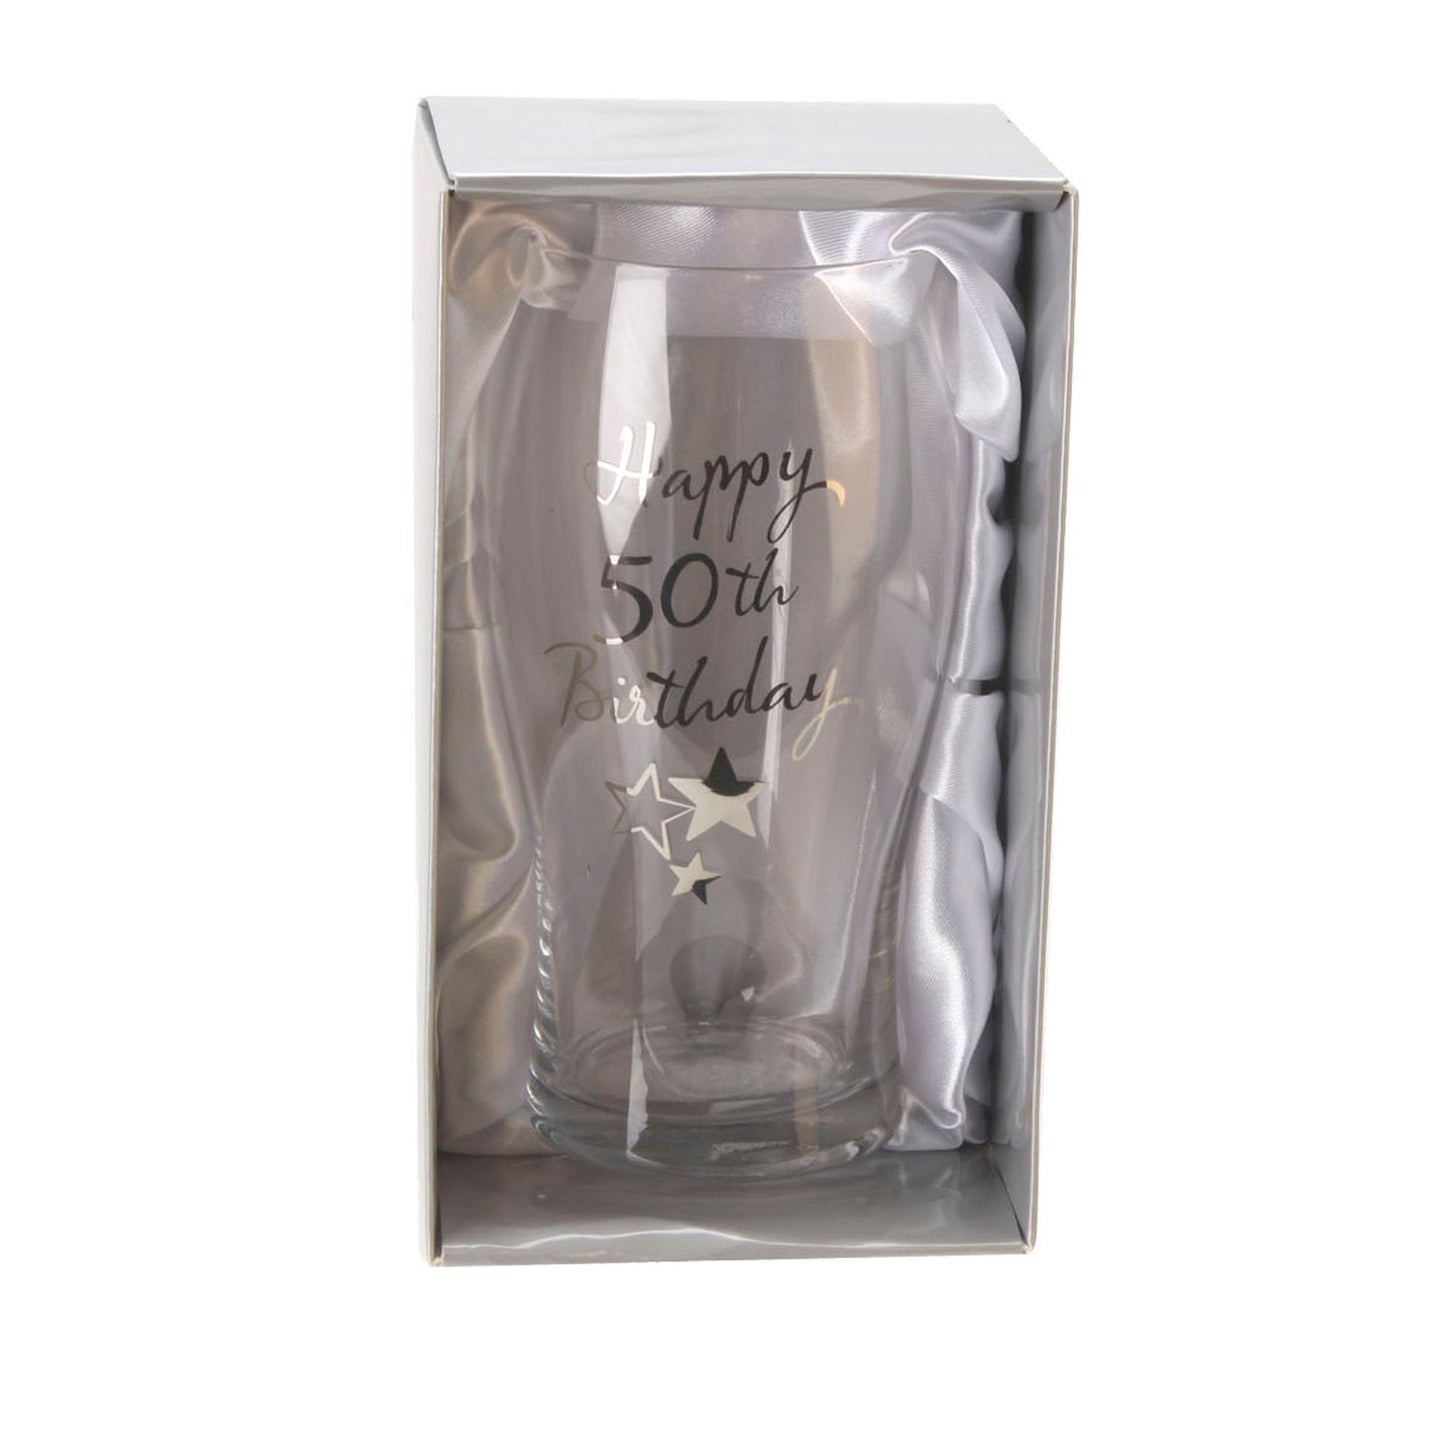 Juliana Happy 50th Birthday Gift - Pint Glass in Gift Box